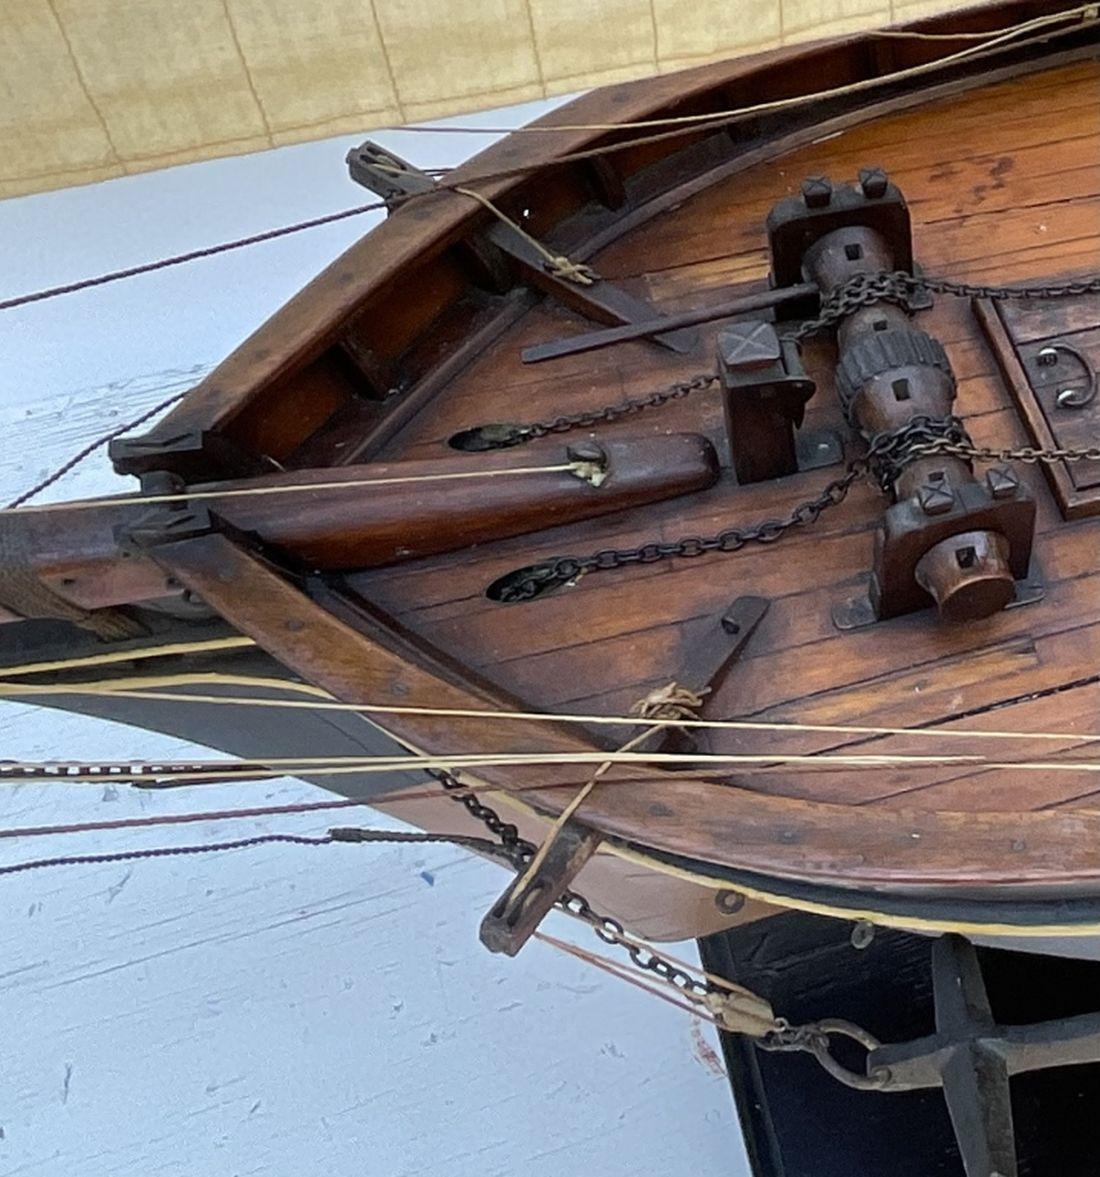 Ship Model Of A Topsail Schooner 8Ft. - Lannan Gallery